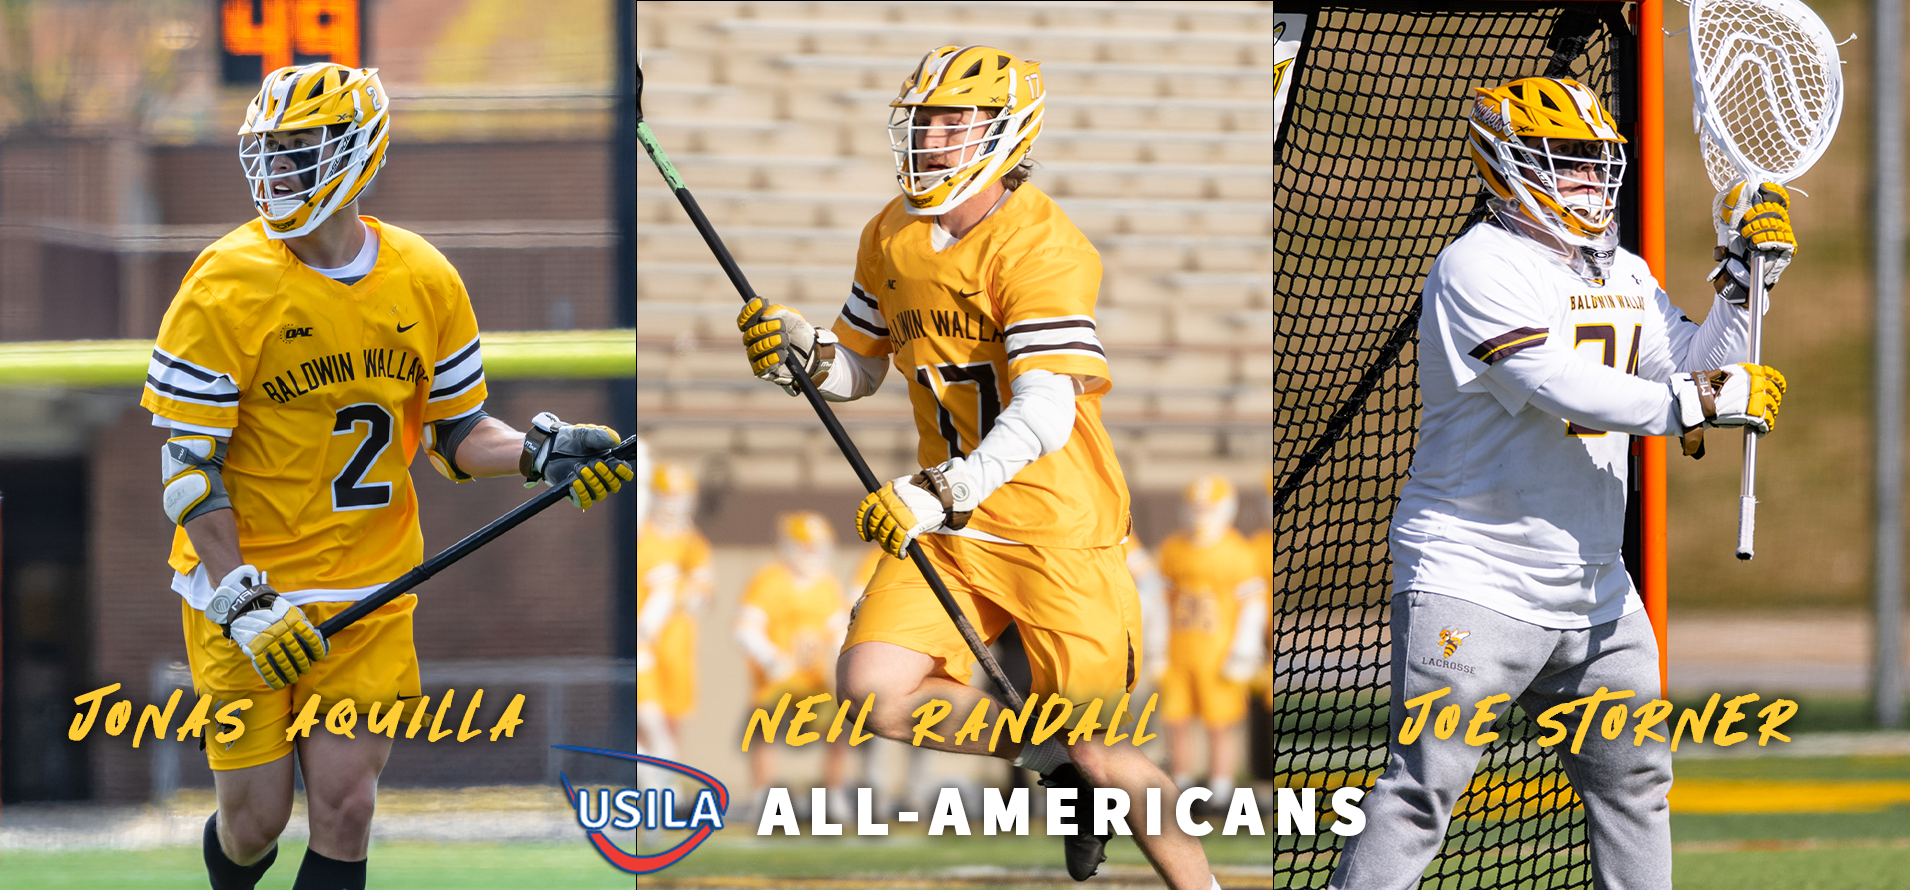 Jonas Aquilla, Neil Randall, and Joe Storner earn USILA All-America honors